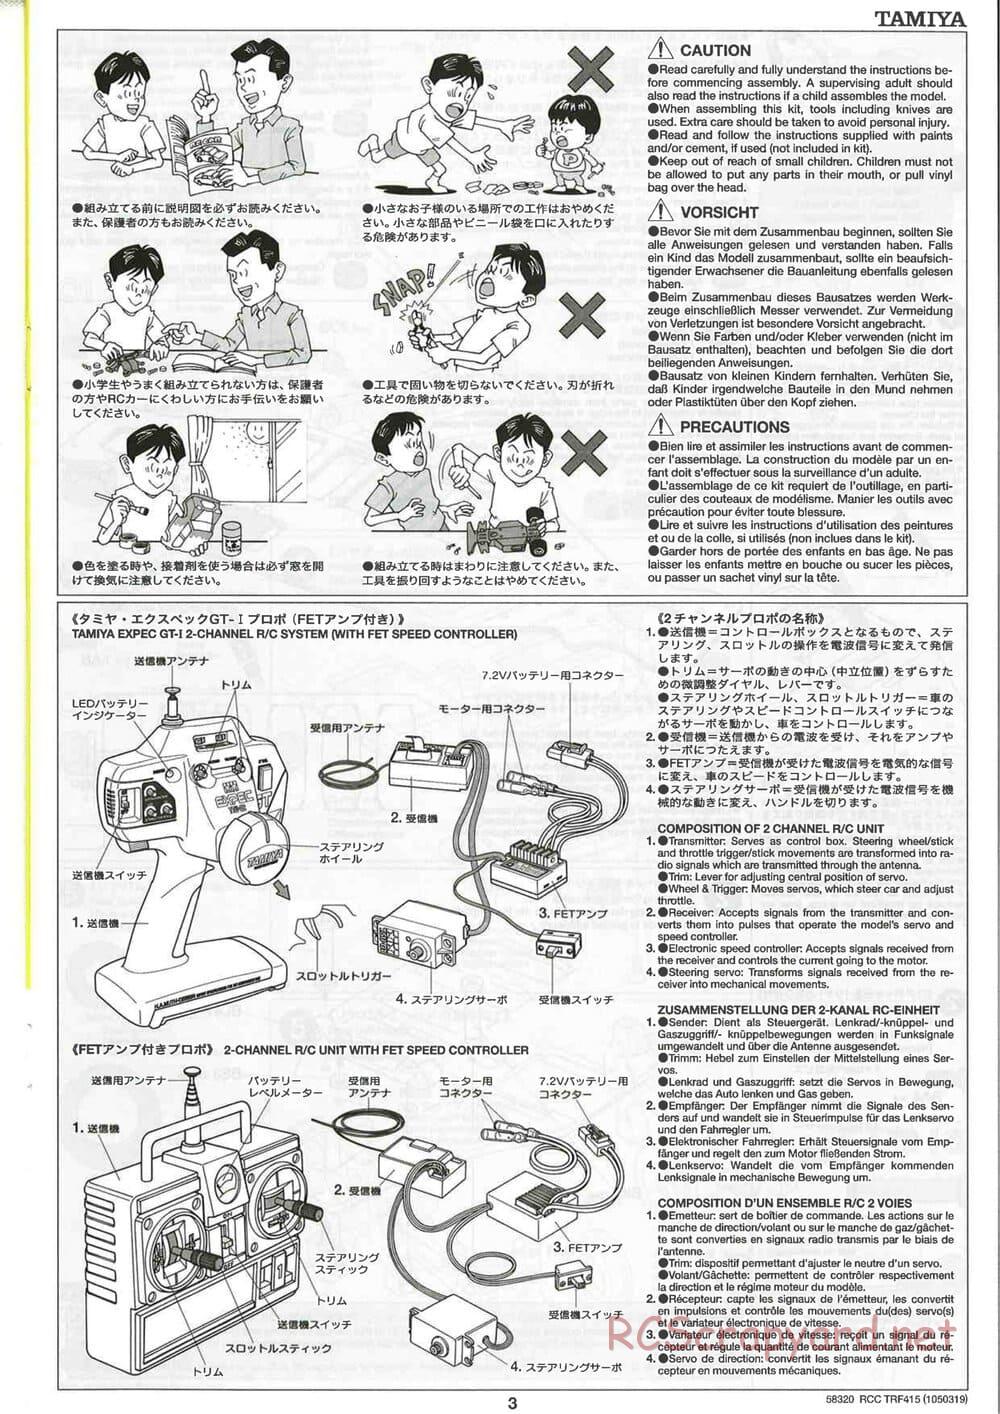 Tamiya - TRF415 Chassis - Manual - Page 3